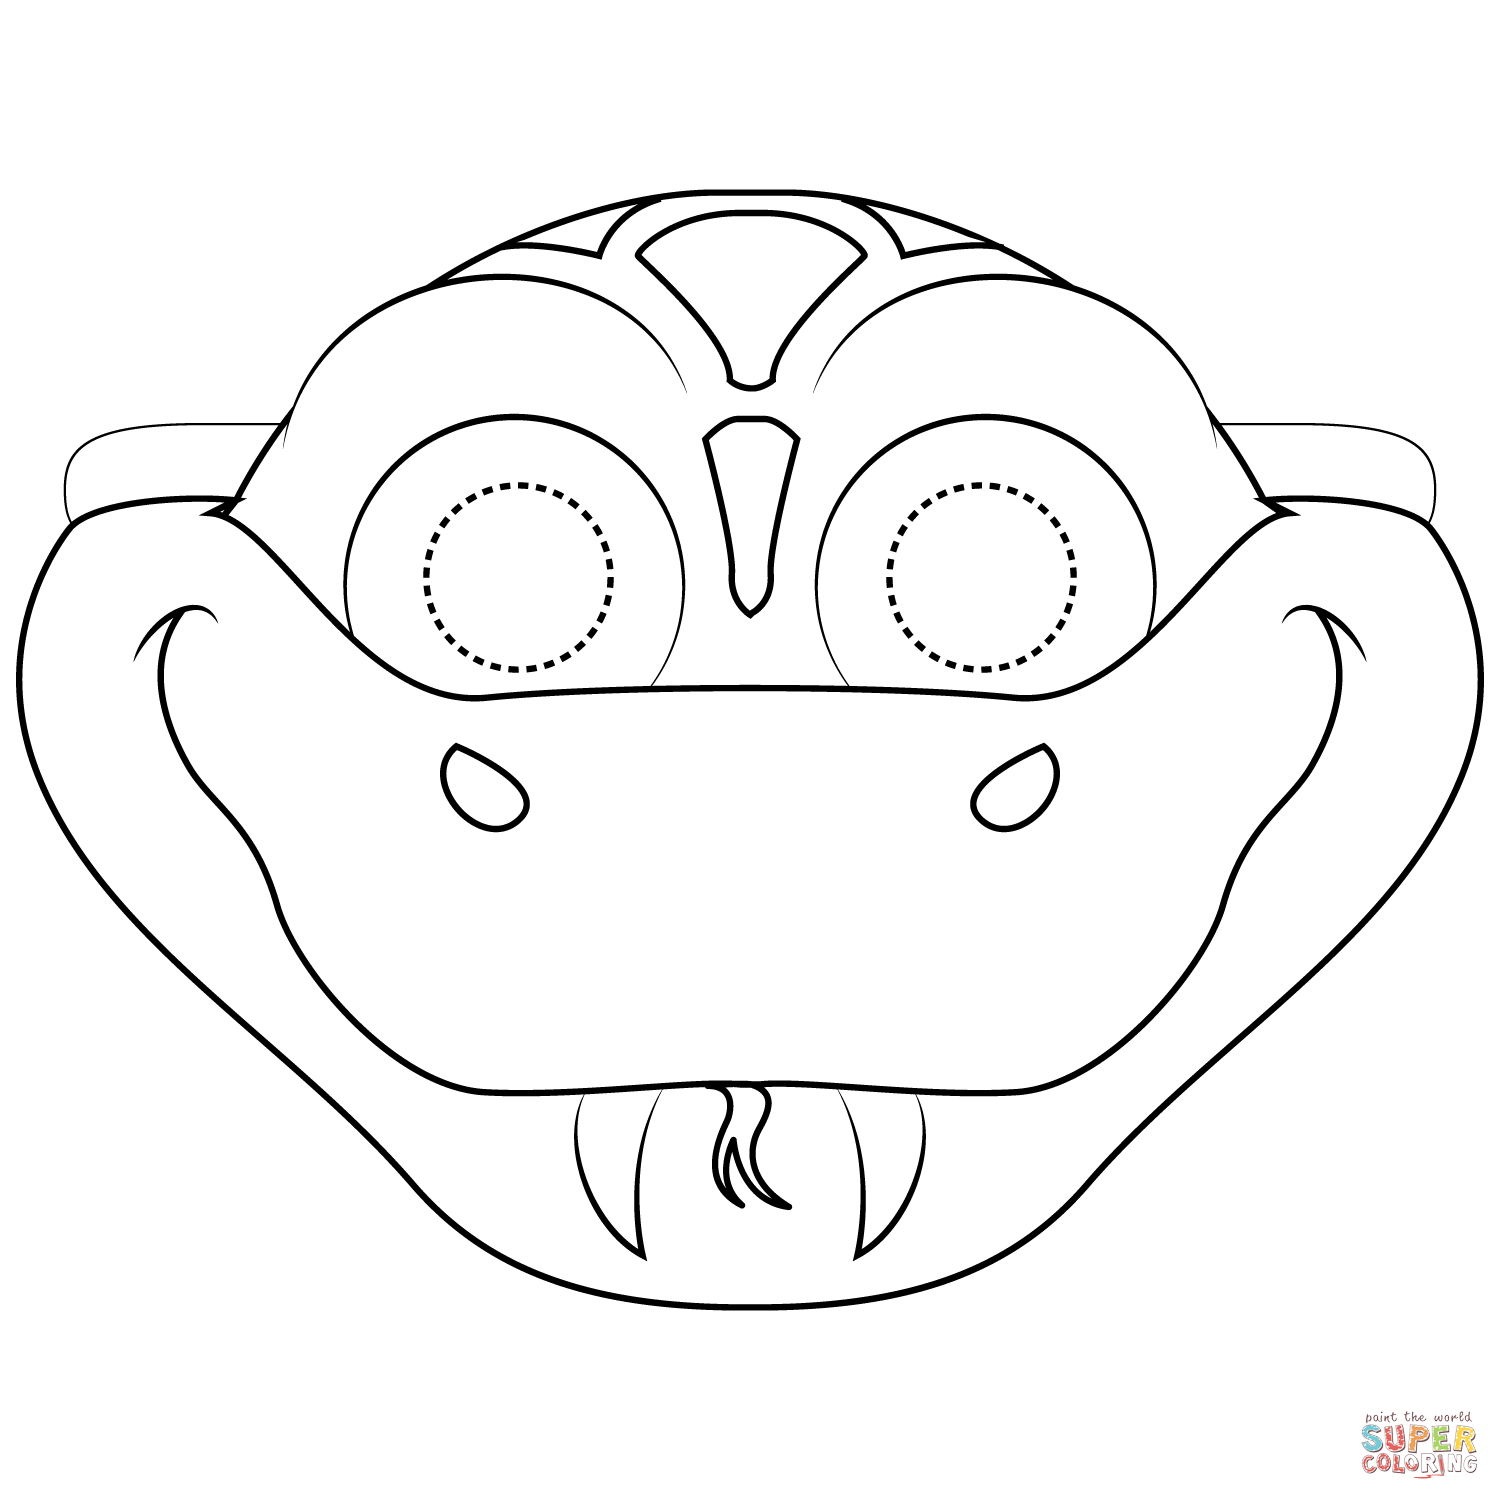 Snake Mask Coloring Page | Free Printable Coloring Pages - Free Printable Lizard Mask